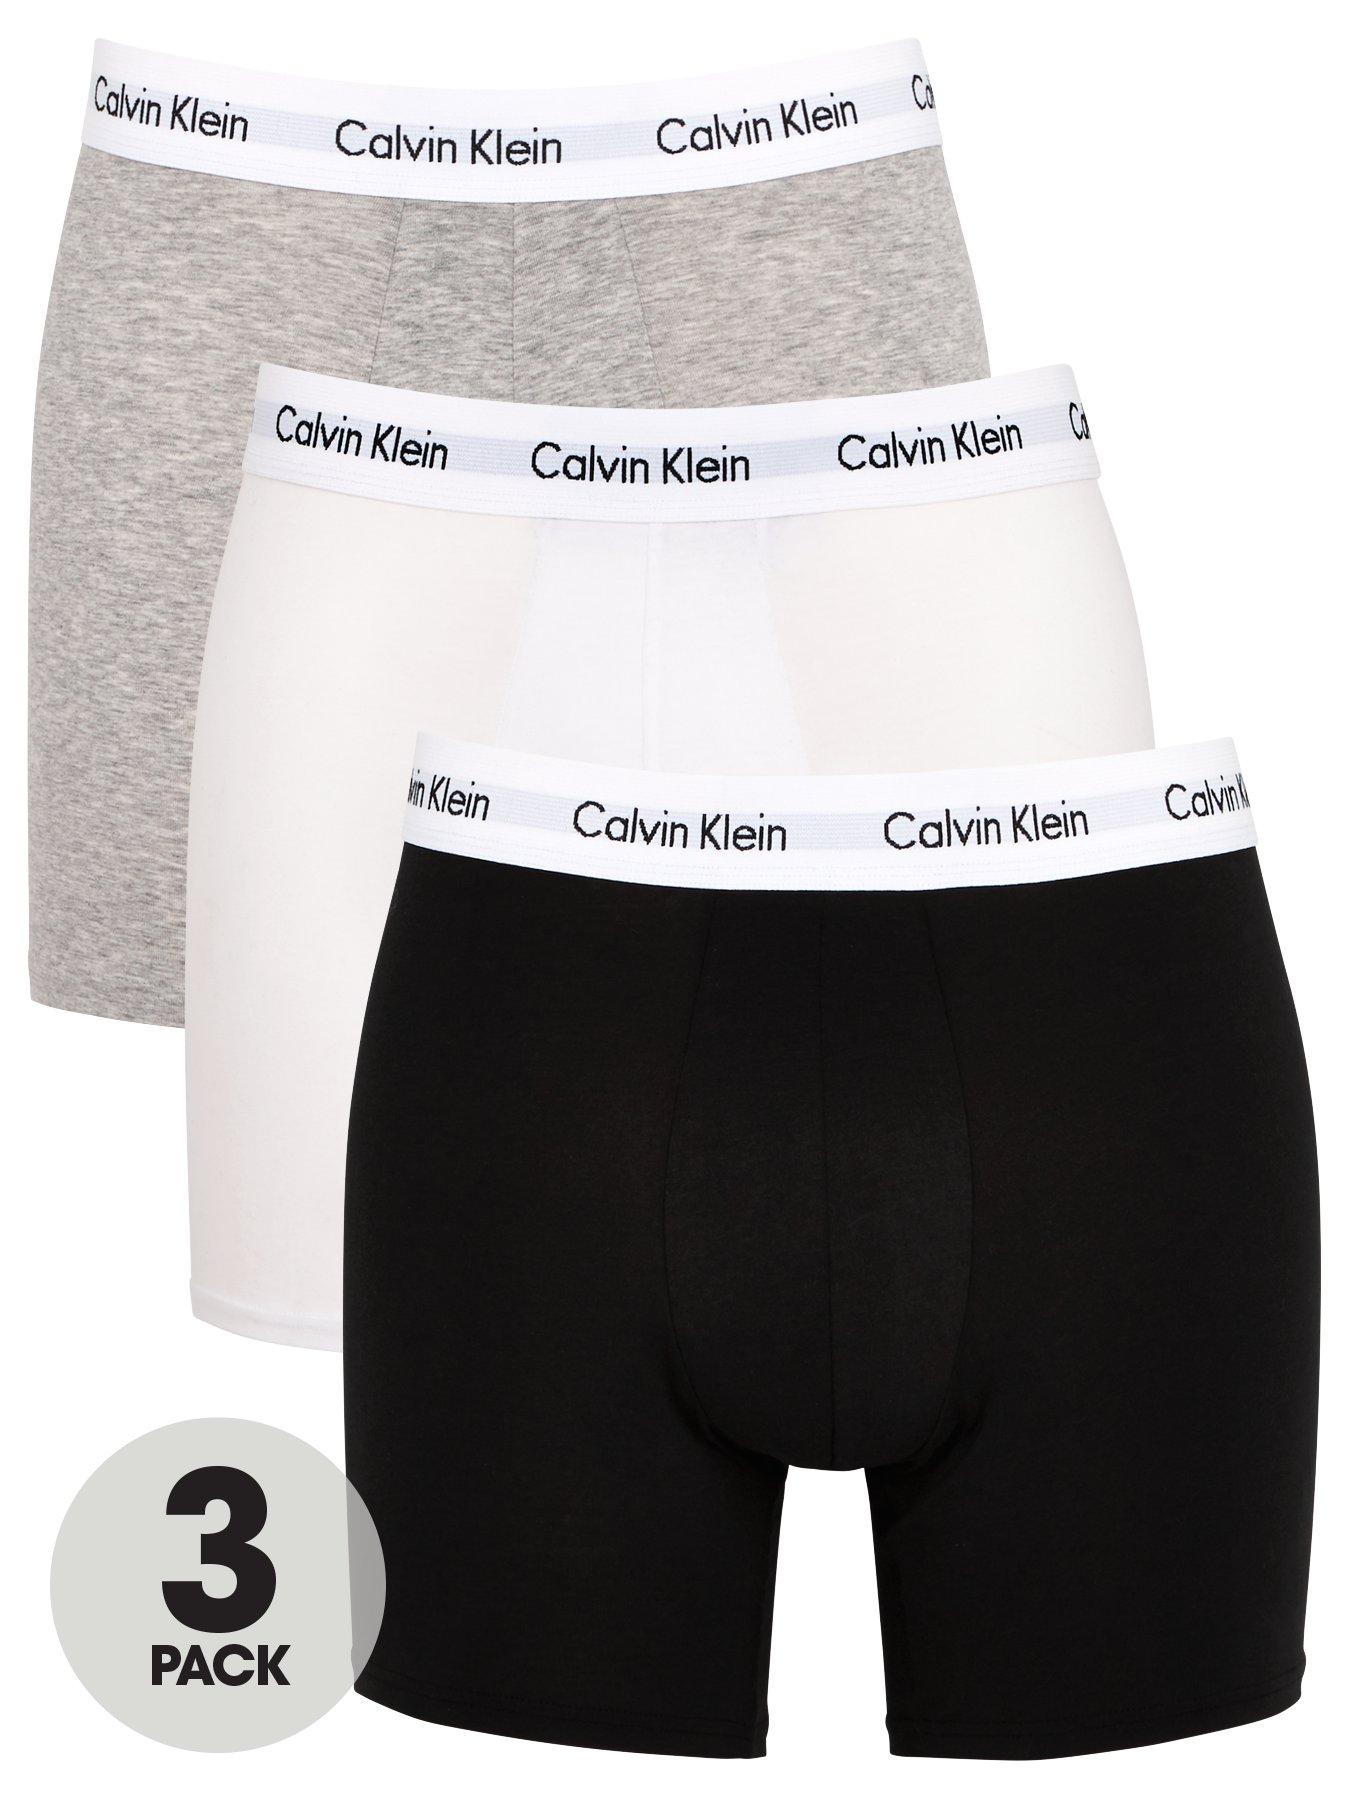 Calvin Klein 3 Pack Boxer Briefs - Multi, White/Black/Grey, Size S, Men